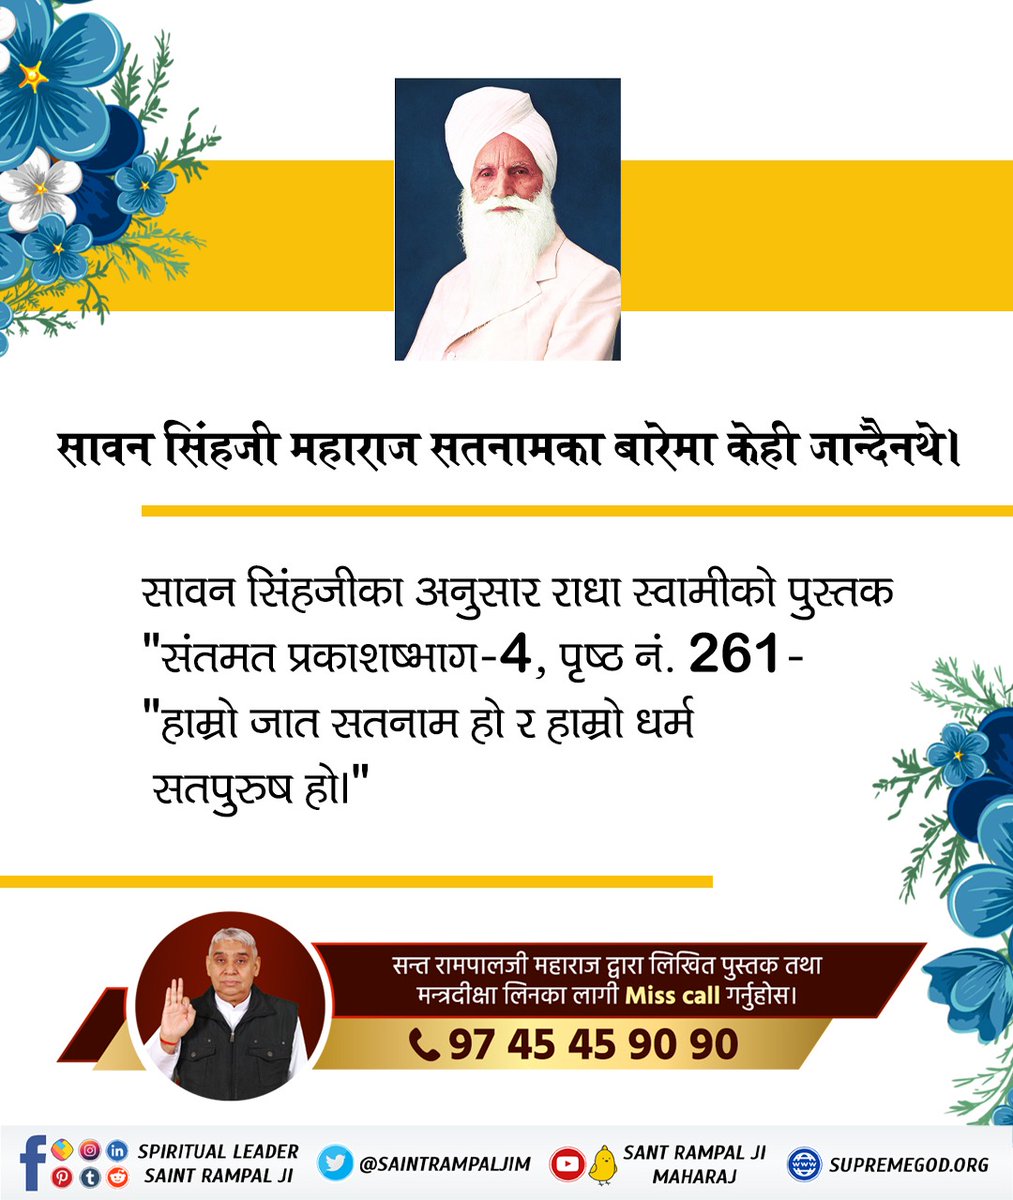 #राधास्वामी_पन्थको_सत्यता Discover the truth at supremegod.org , Sant Rampal Ji Maharaj is the true Guru, leading to salvation.